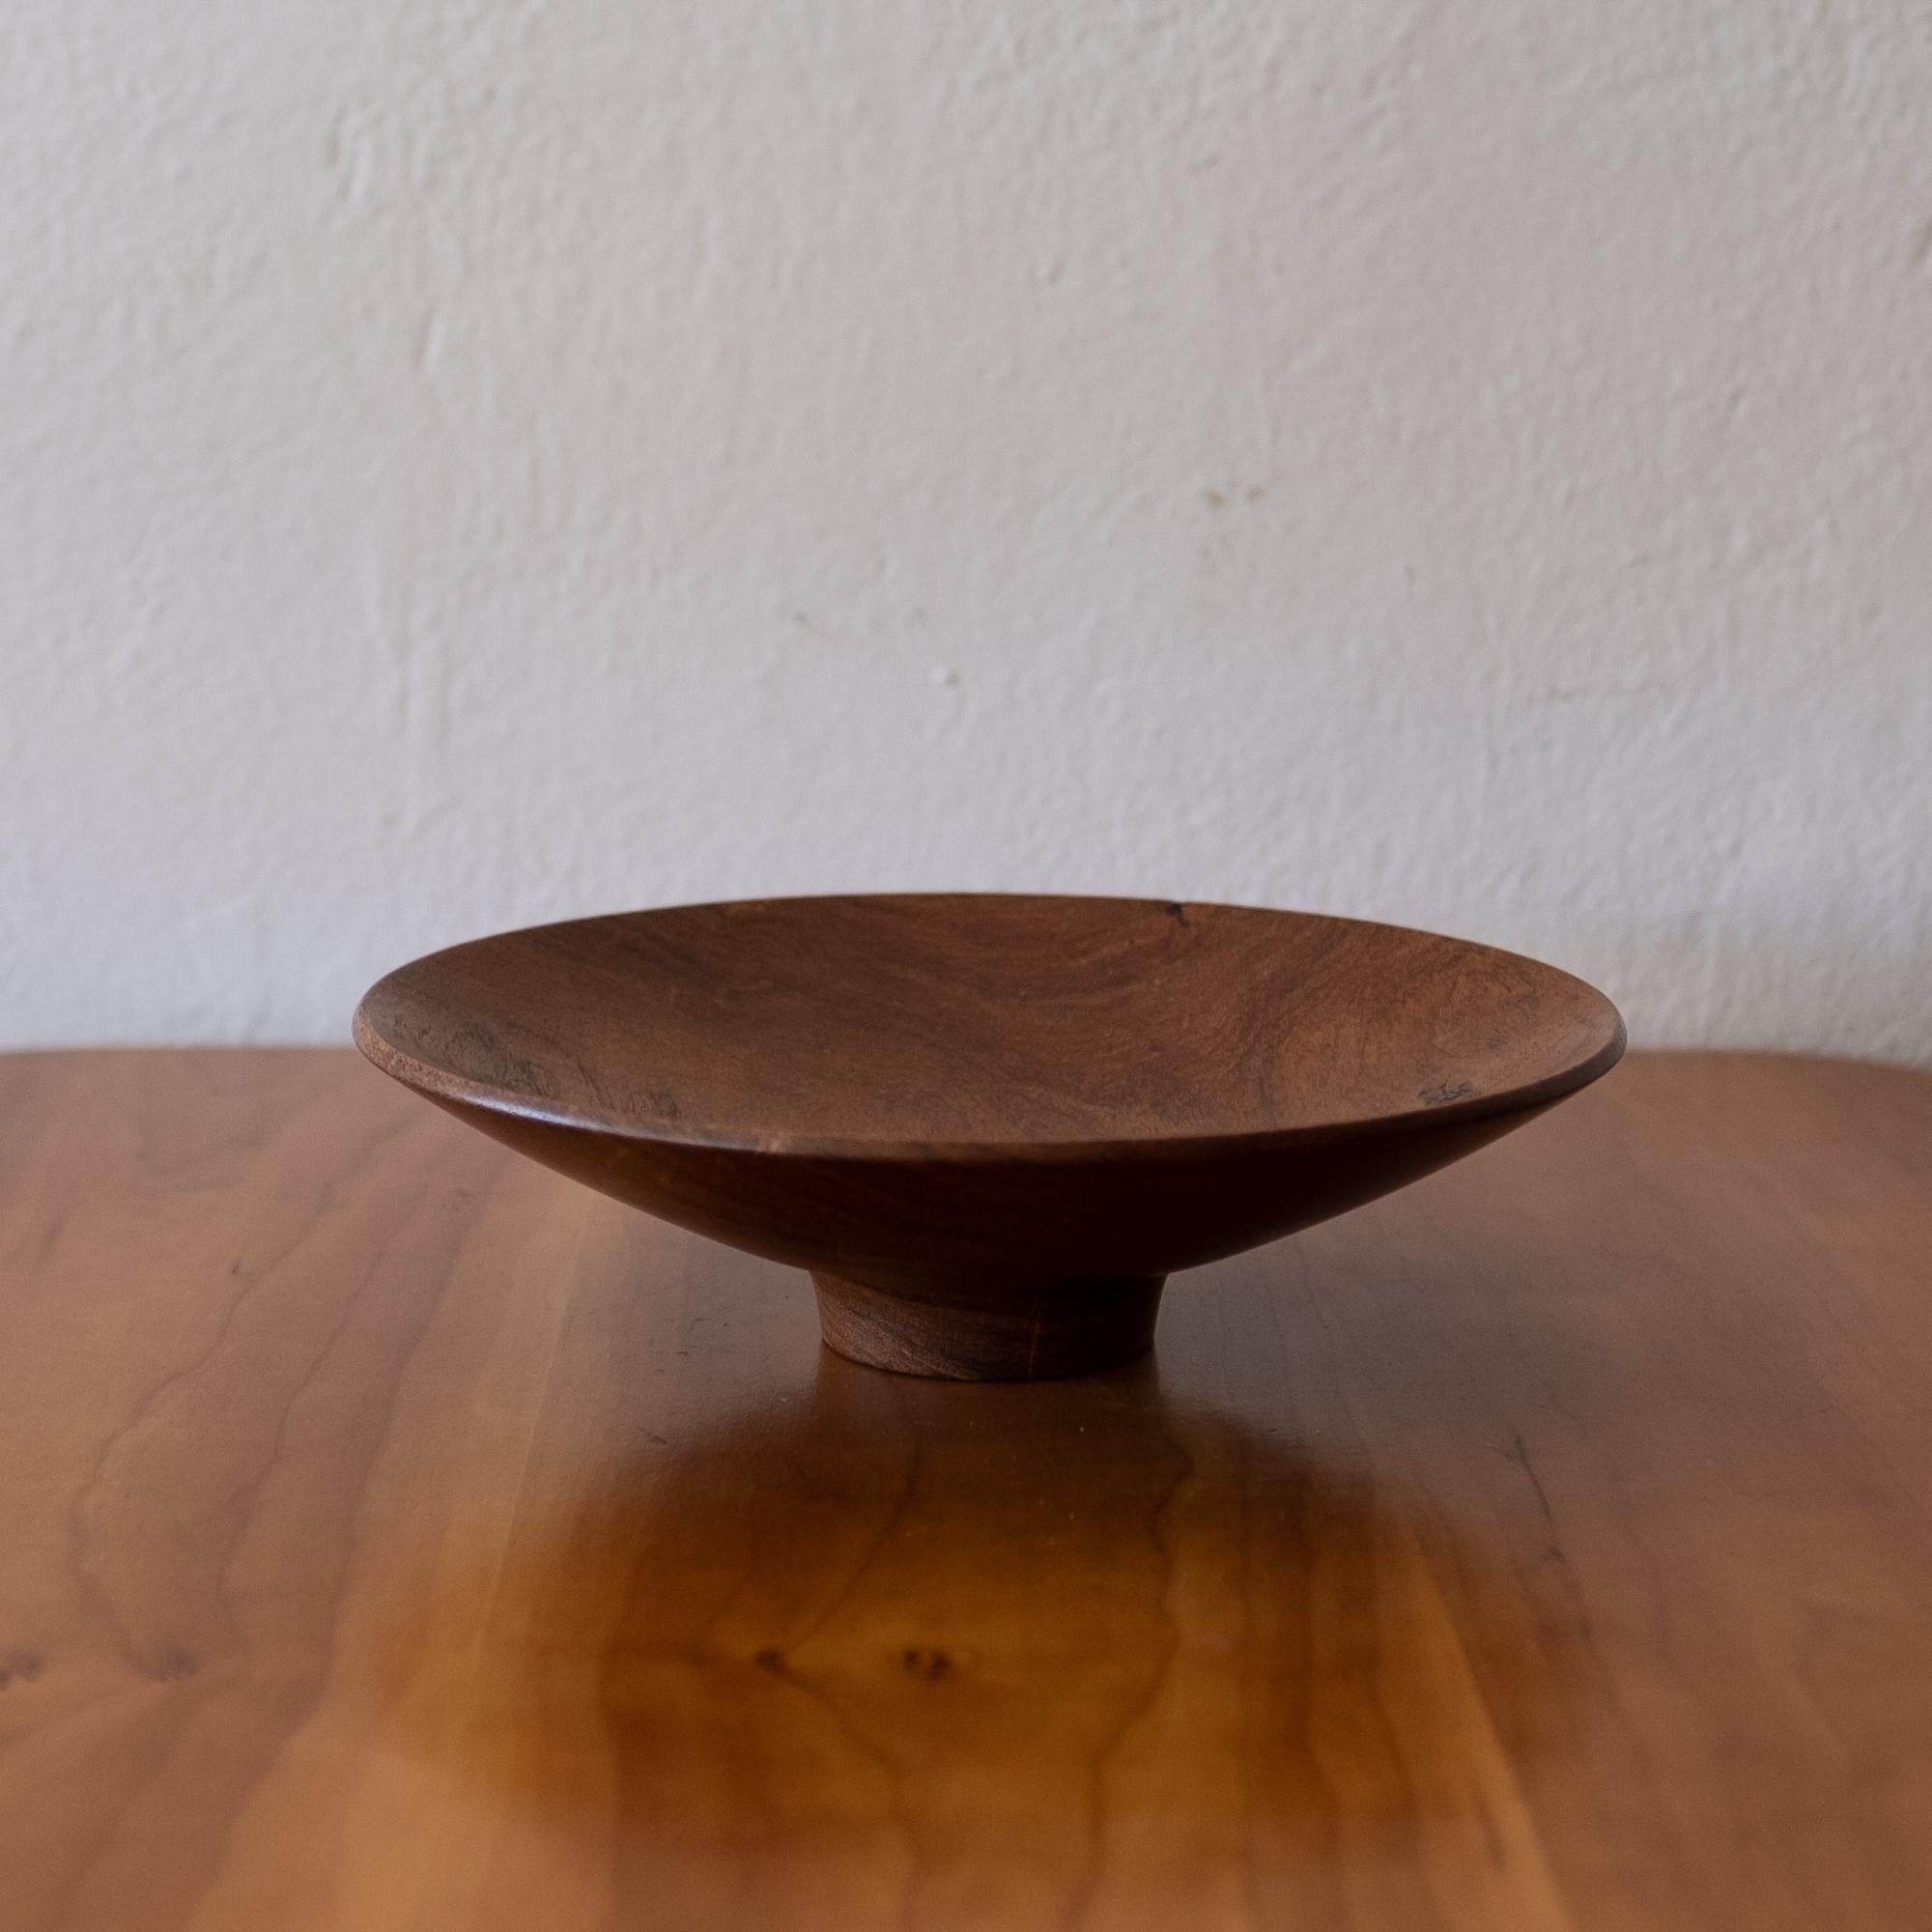 Wood turned bowl by Arizona artist, Ben Goo. Stamped 